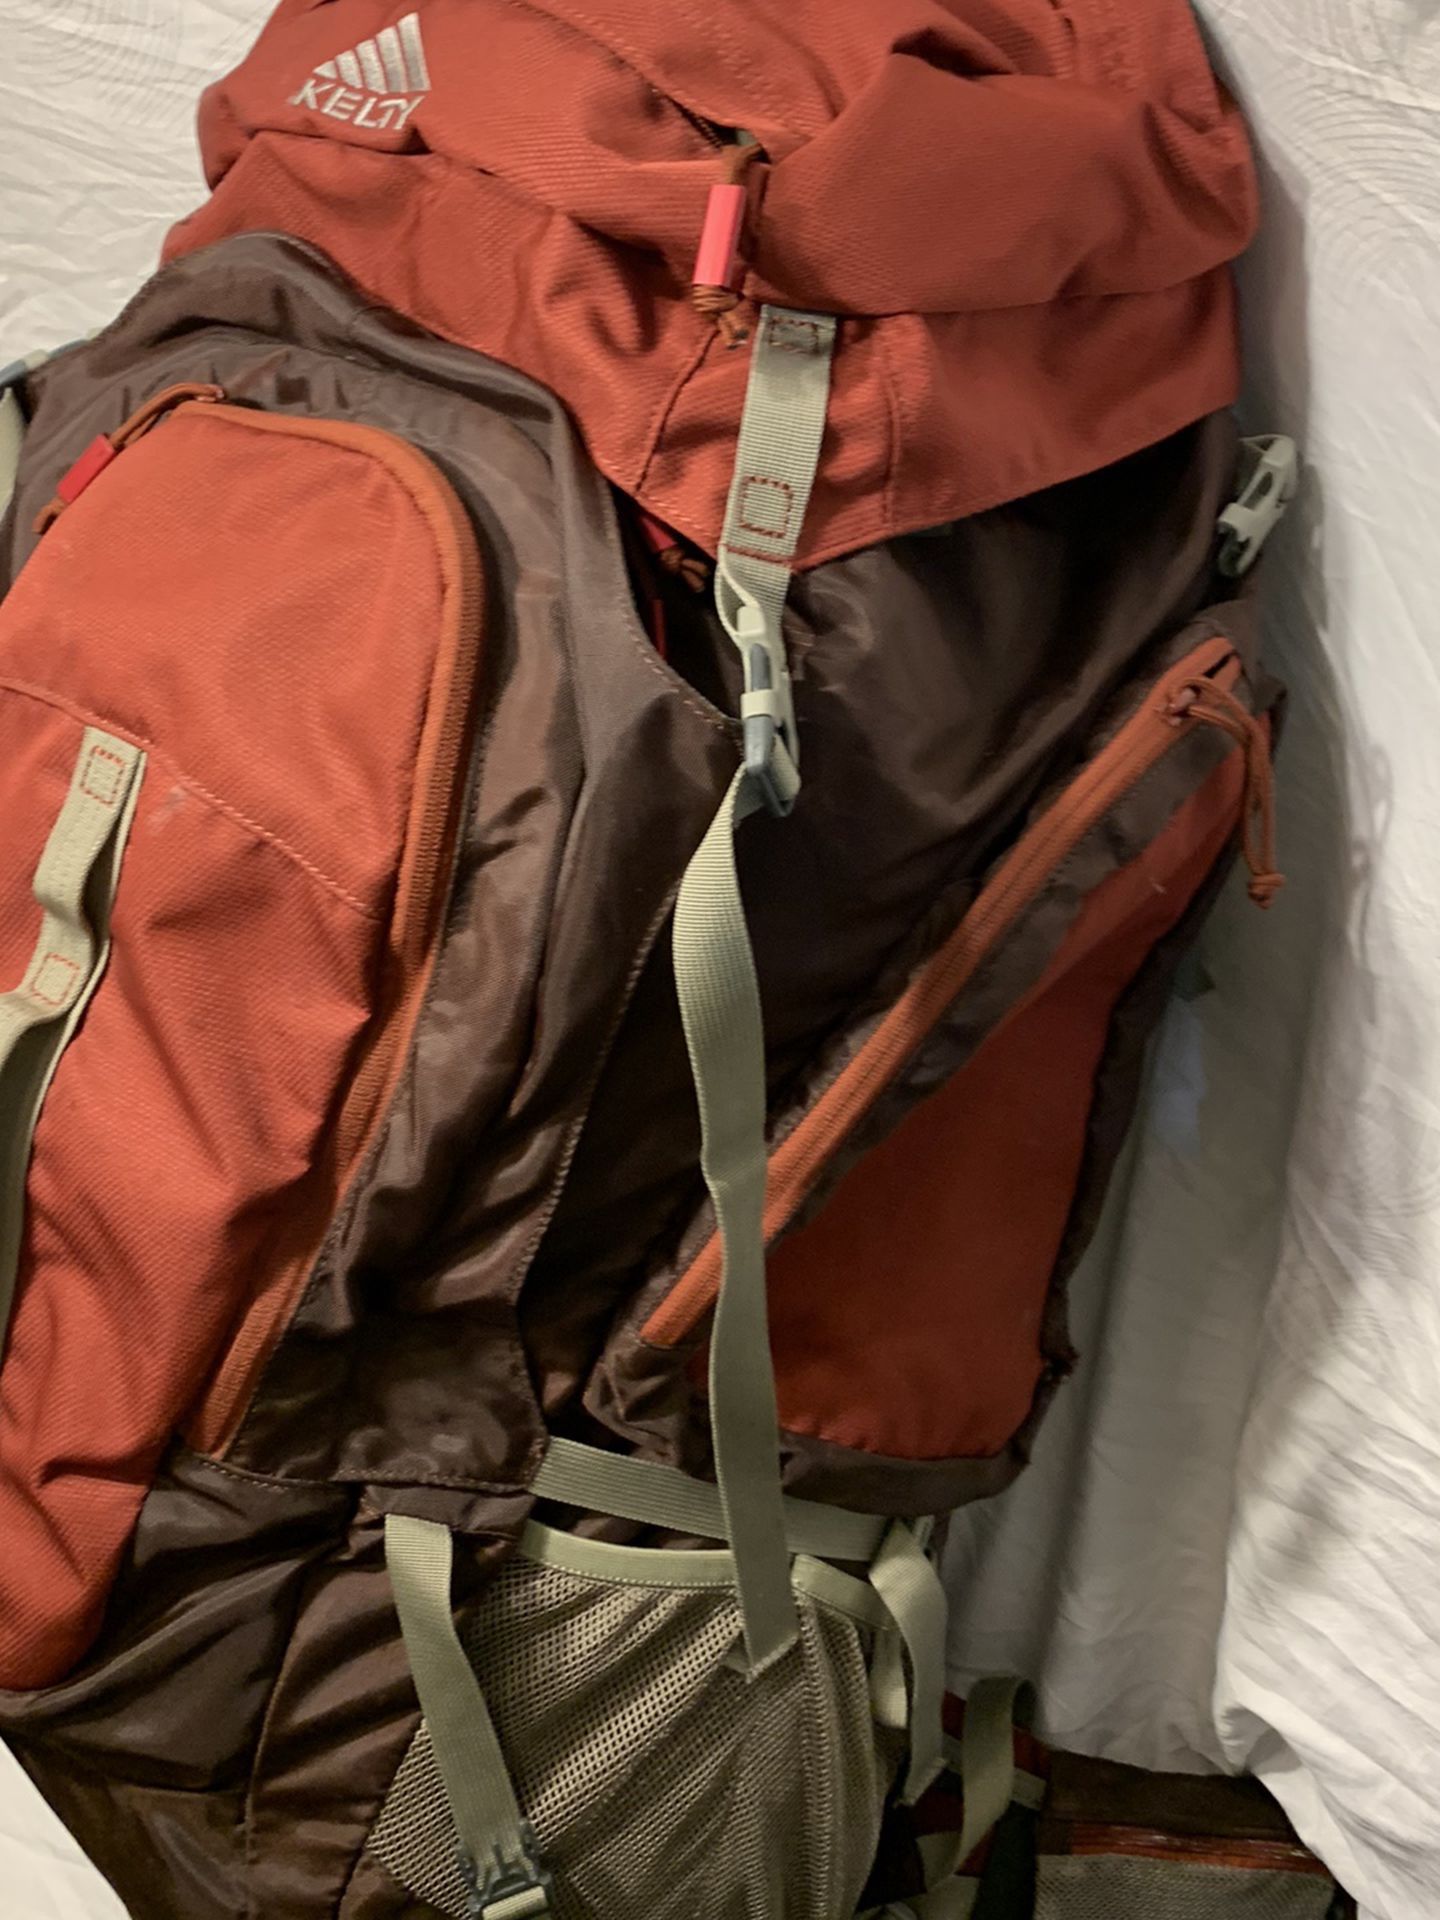 Keltyc oyote 80 backpack